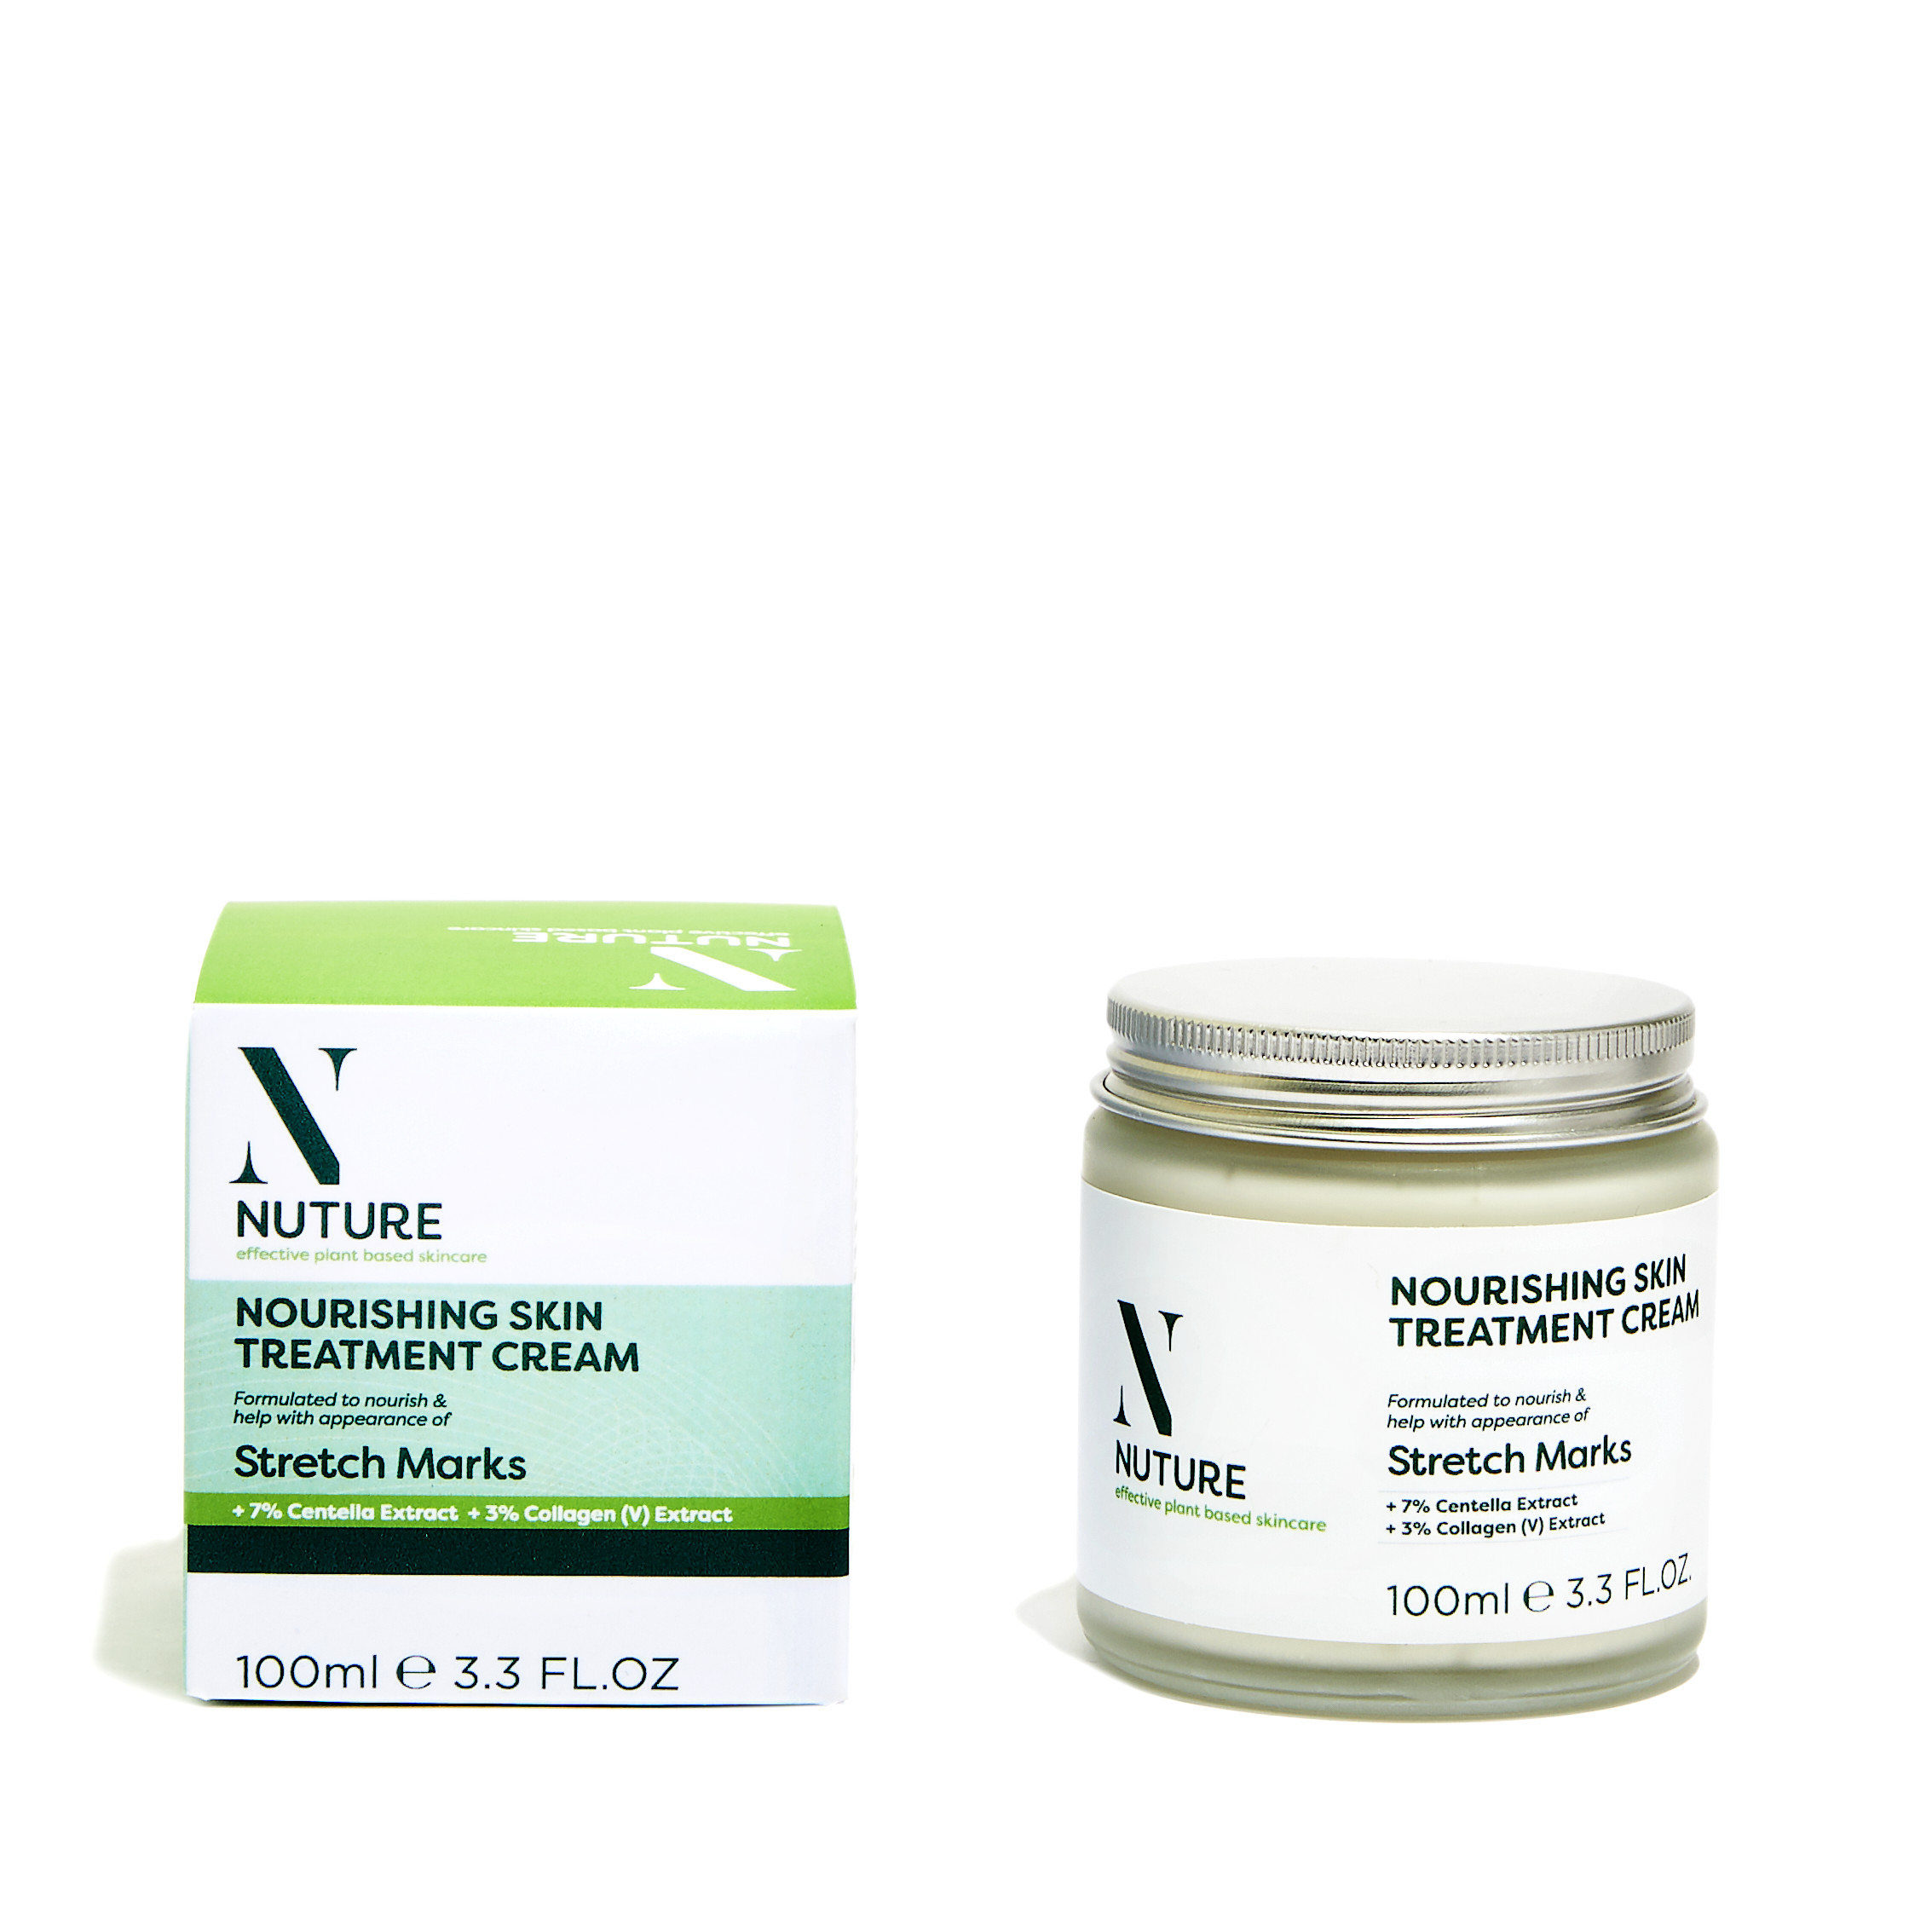 Nuture Nourishing Skin Treatment Cream.png